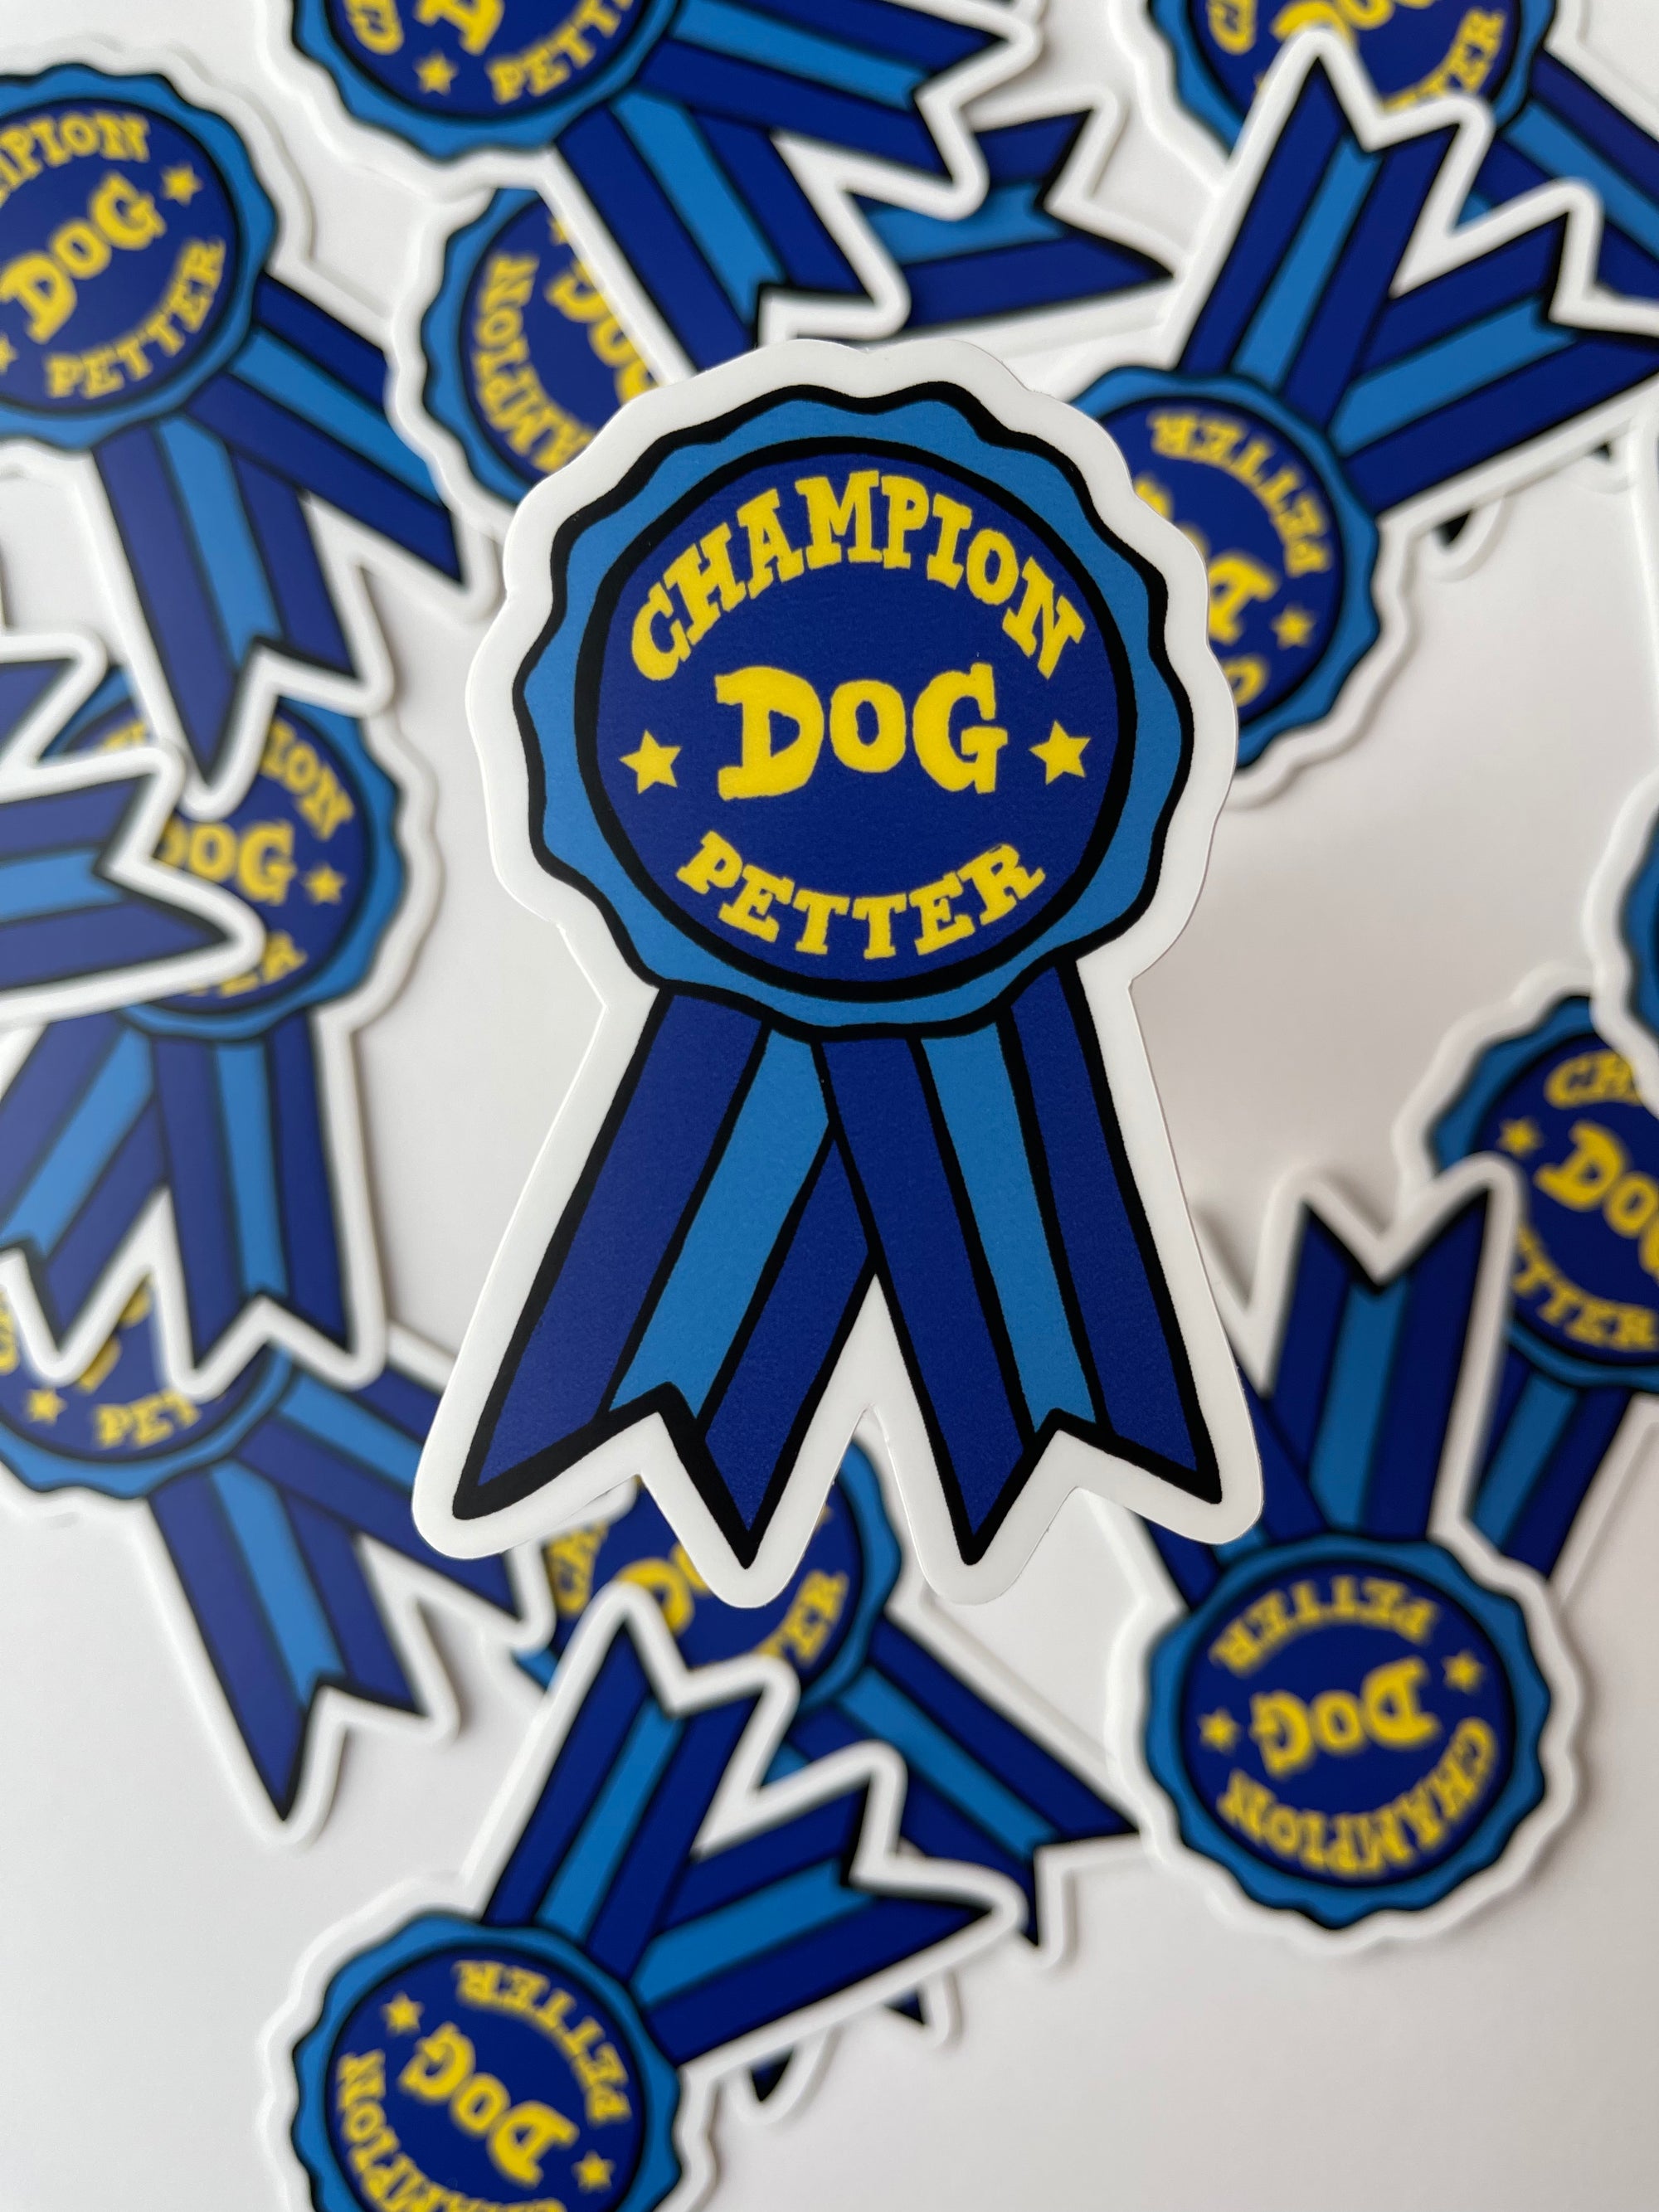 “Champion Dog Petter” Vinyl Sticker